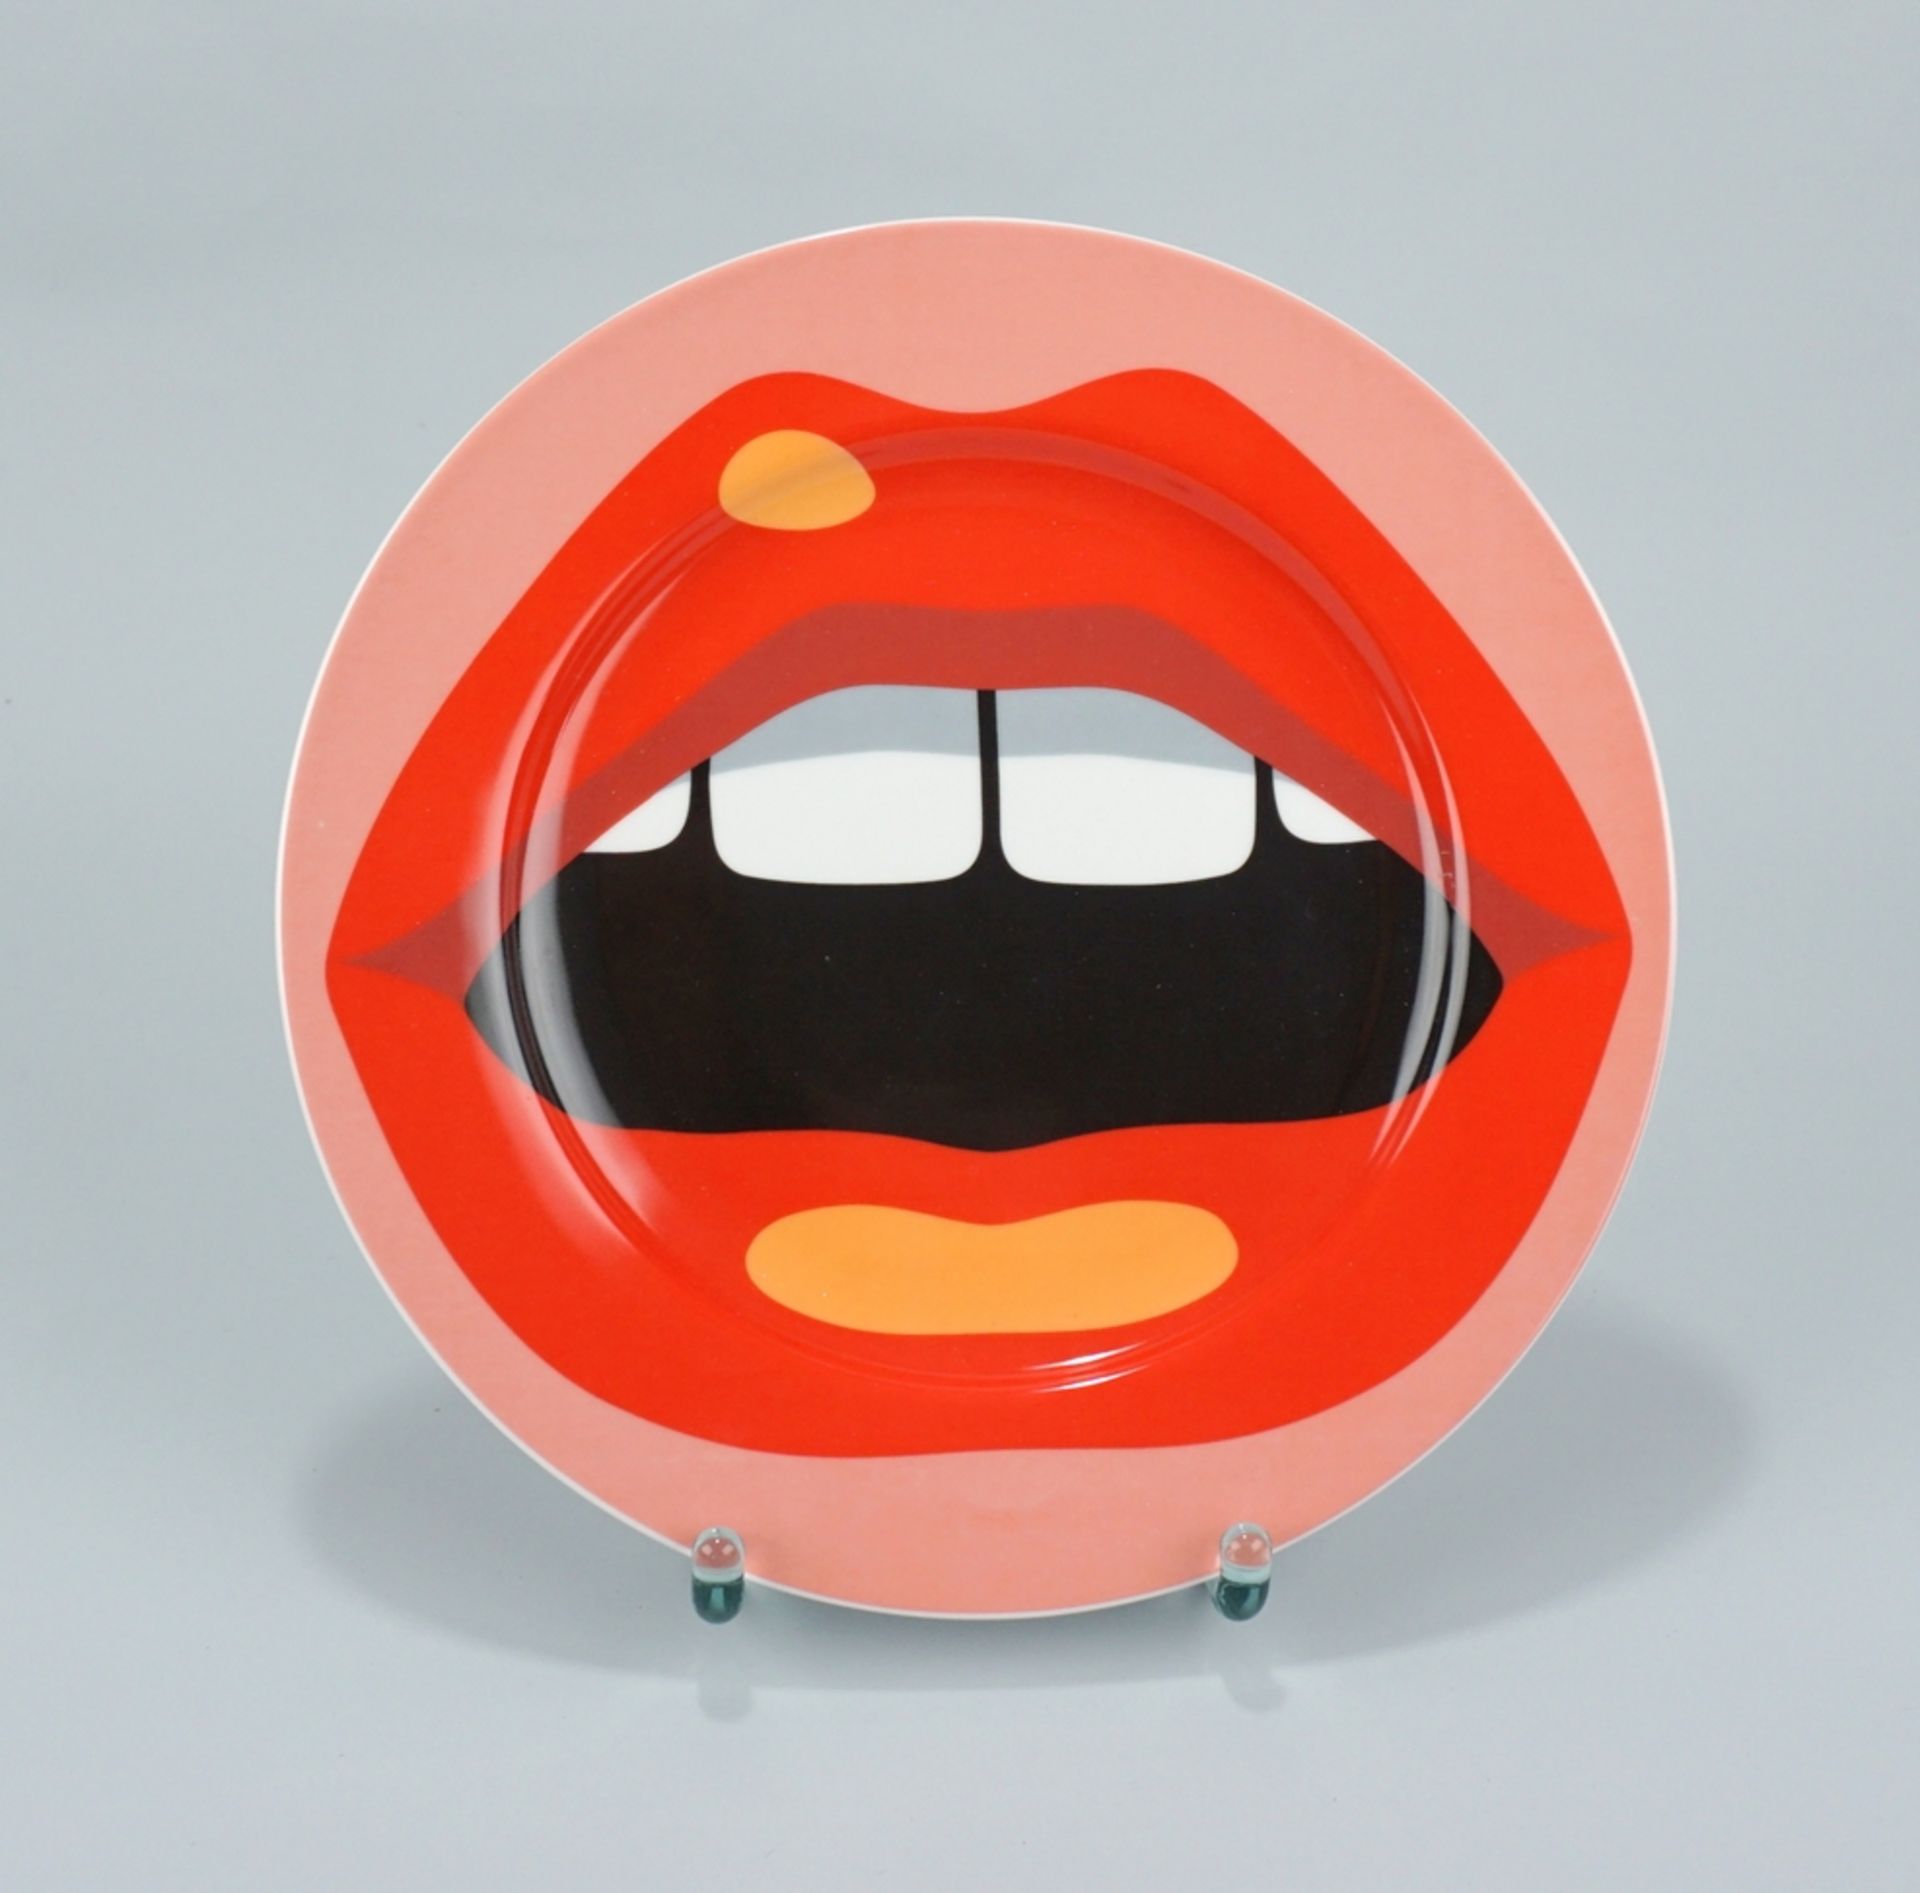 Studio Job-Blow Teller, Motiv "Mouth", für Seletti entworfene Kollektion, 2017